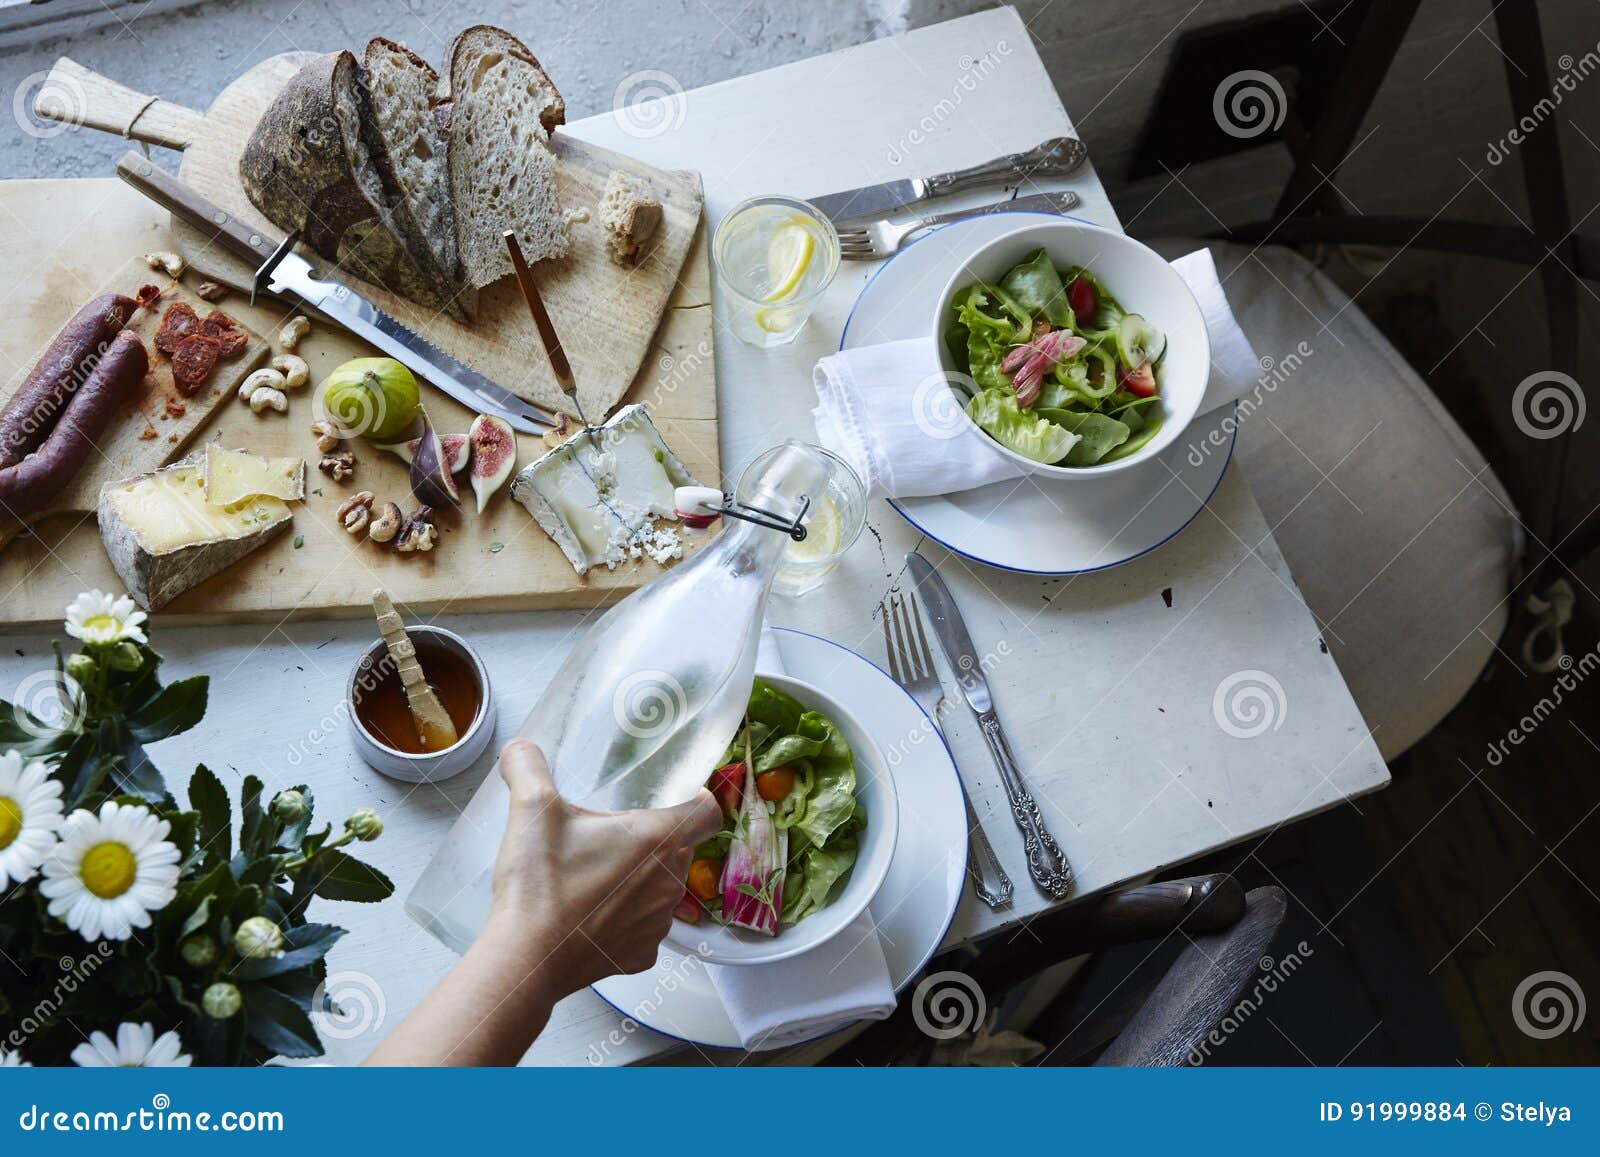 starter and salads in restaurant